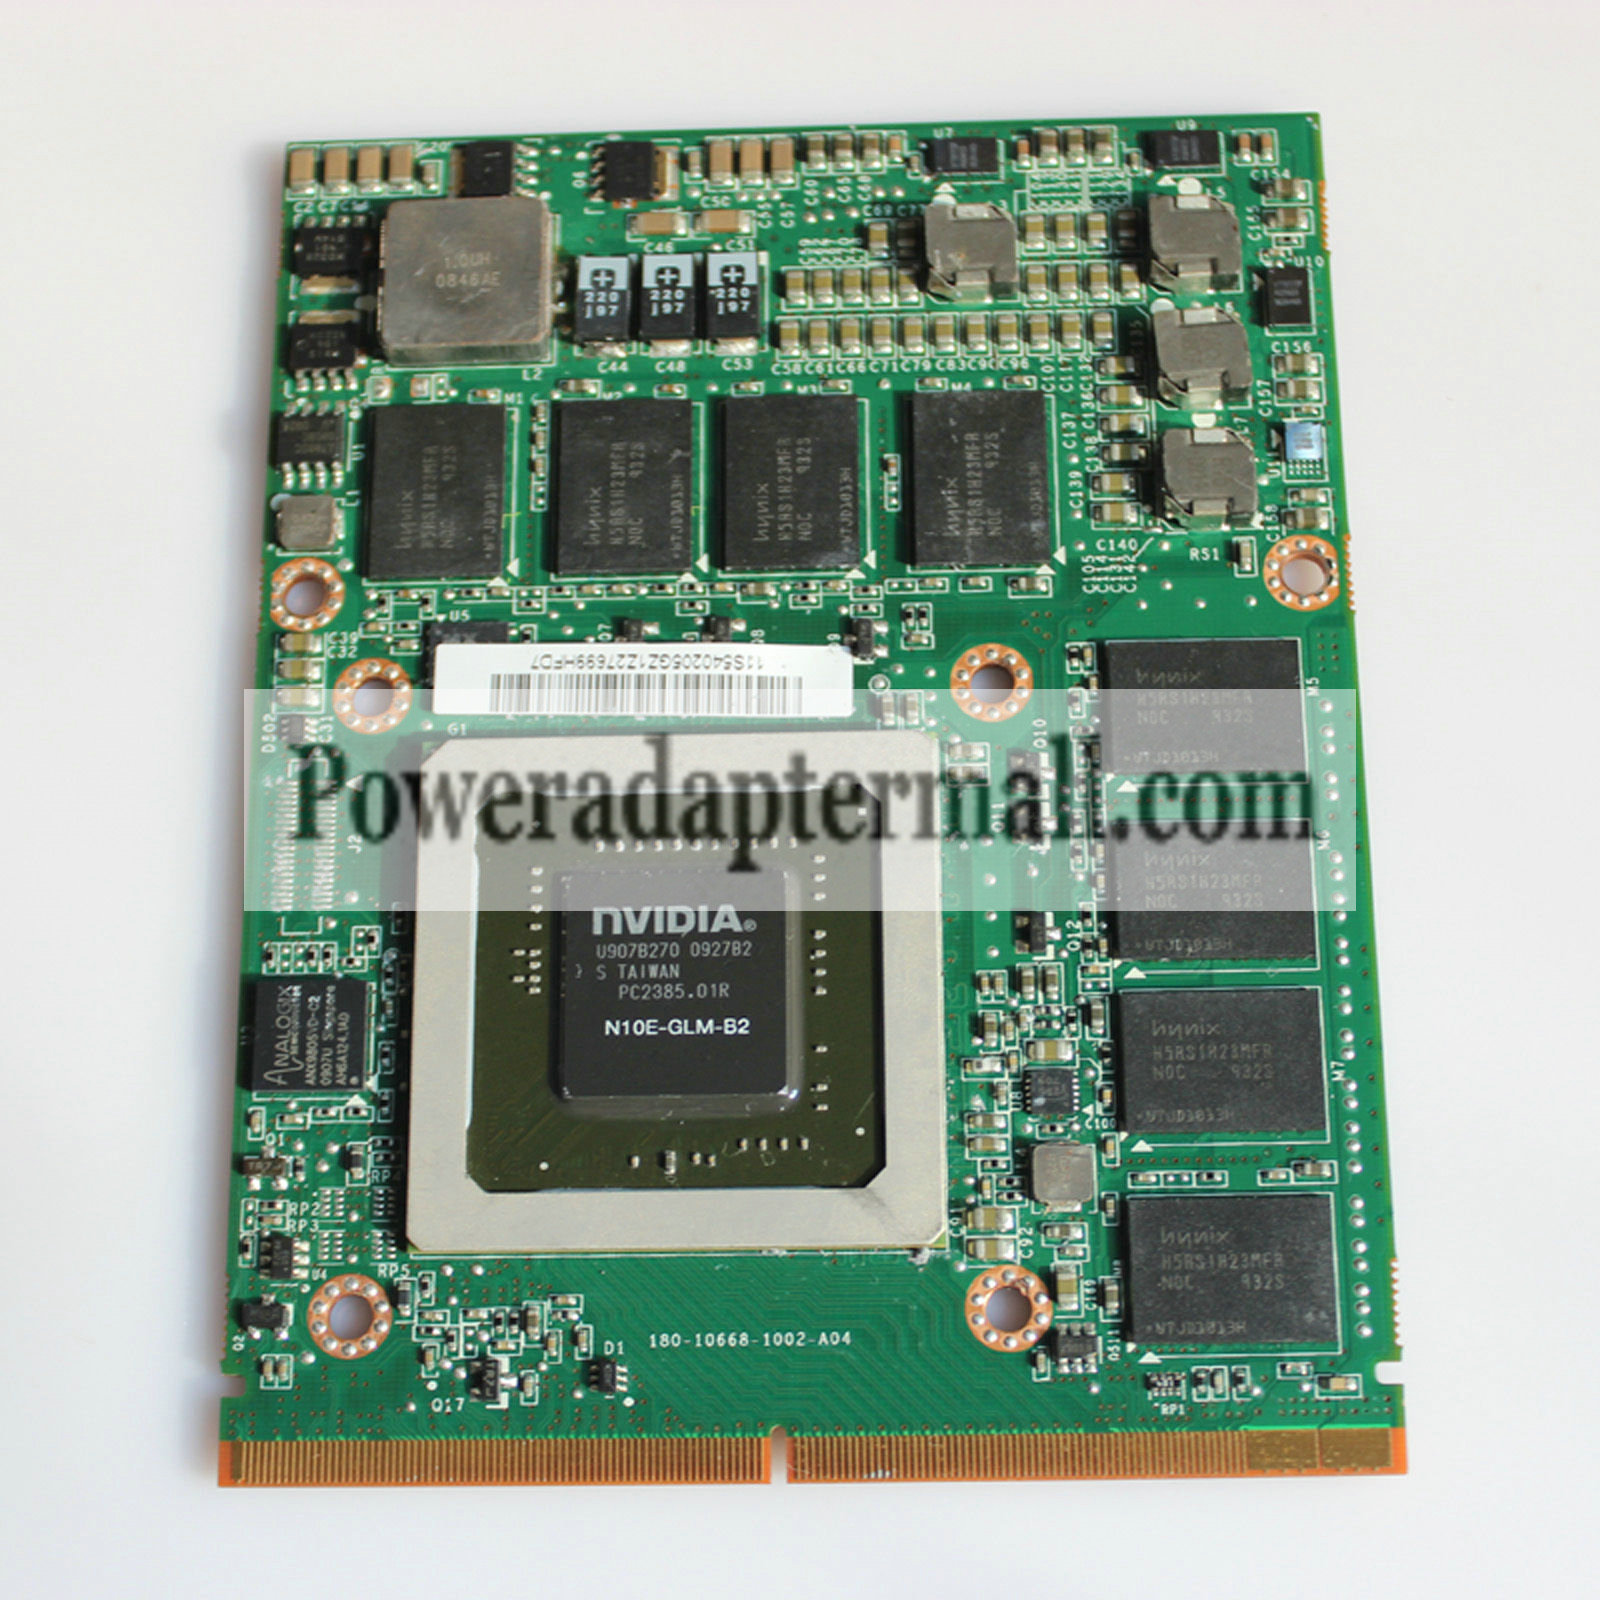 505986-001 nVidia Quadro FX2800M N10E-GLM-B2 DDR3 1GB Video Card